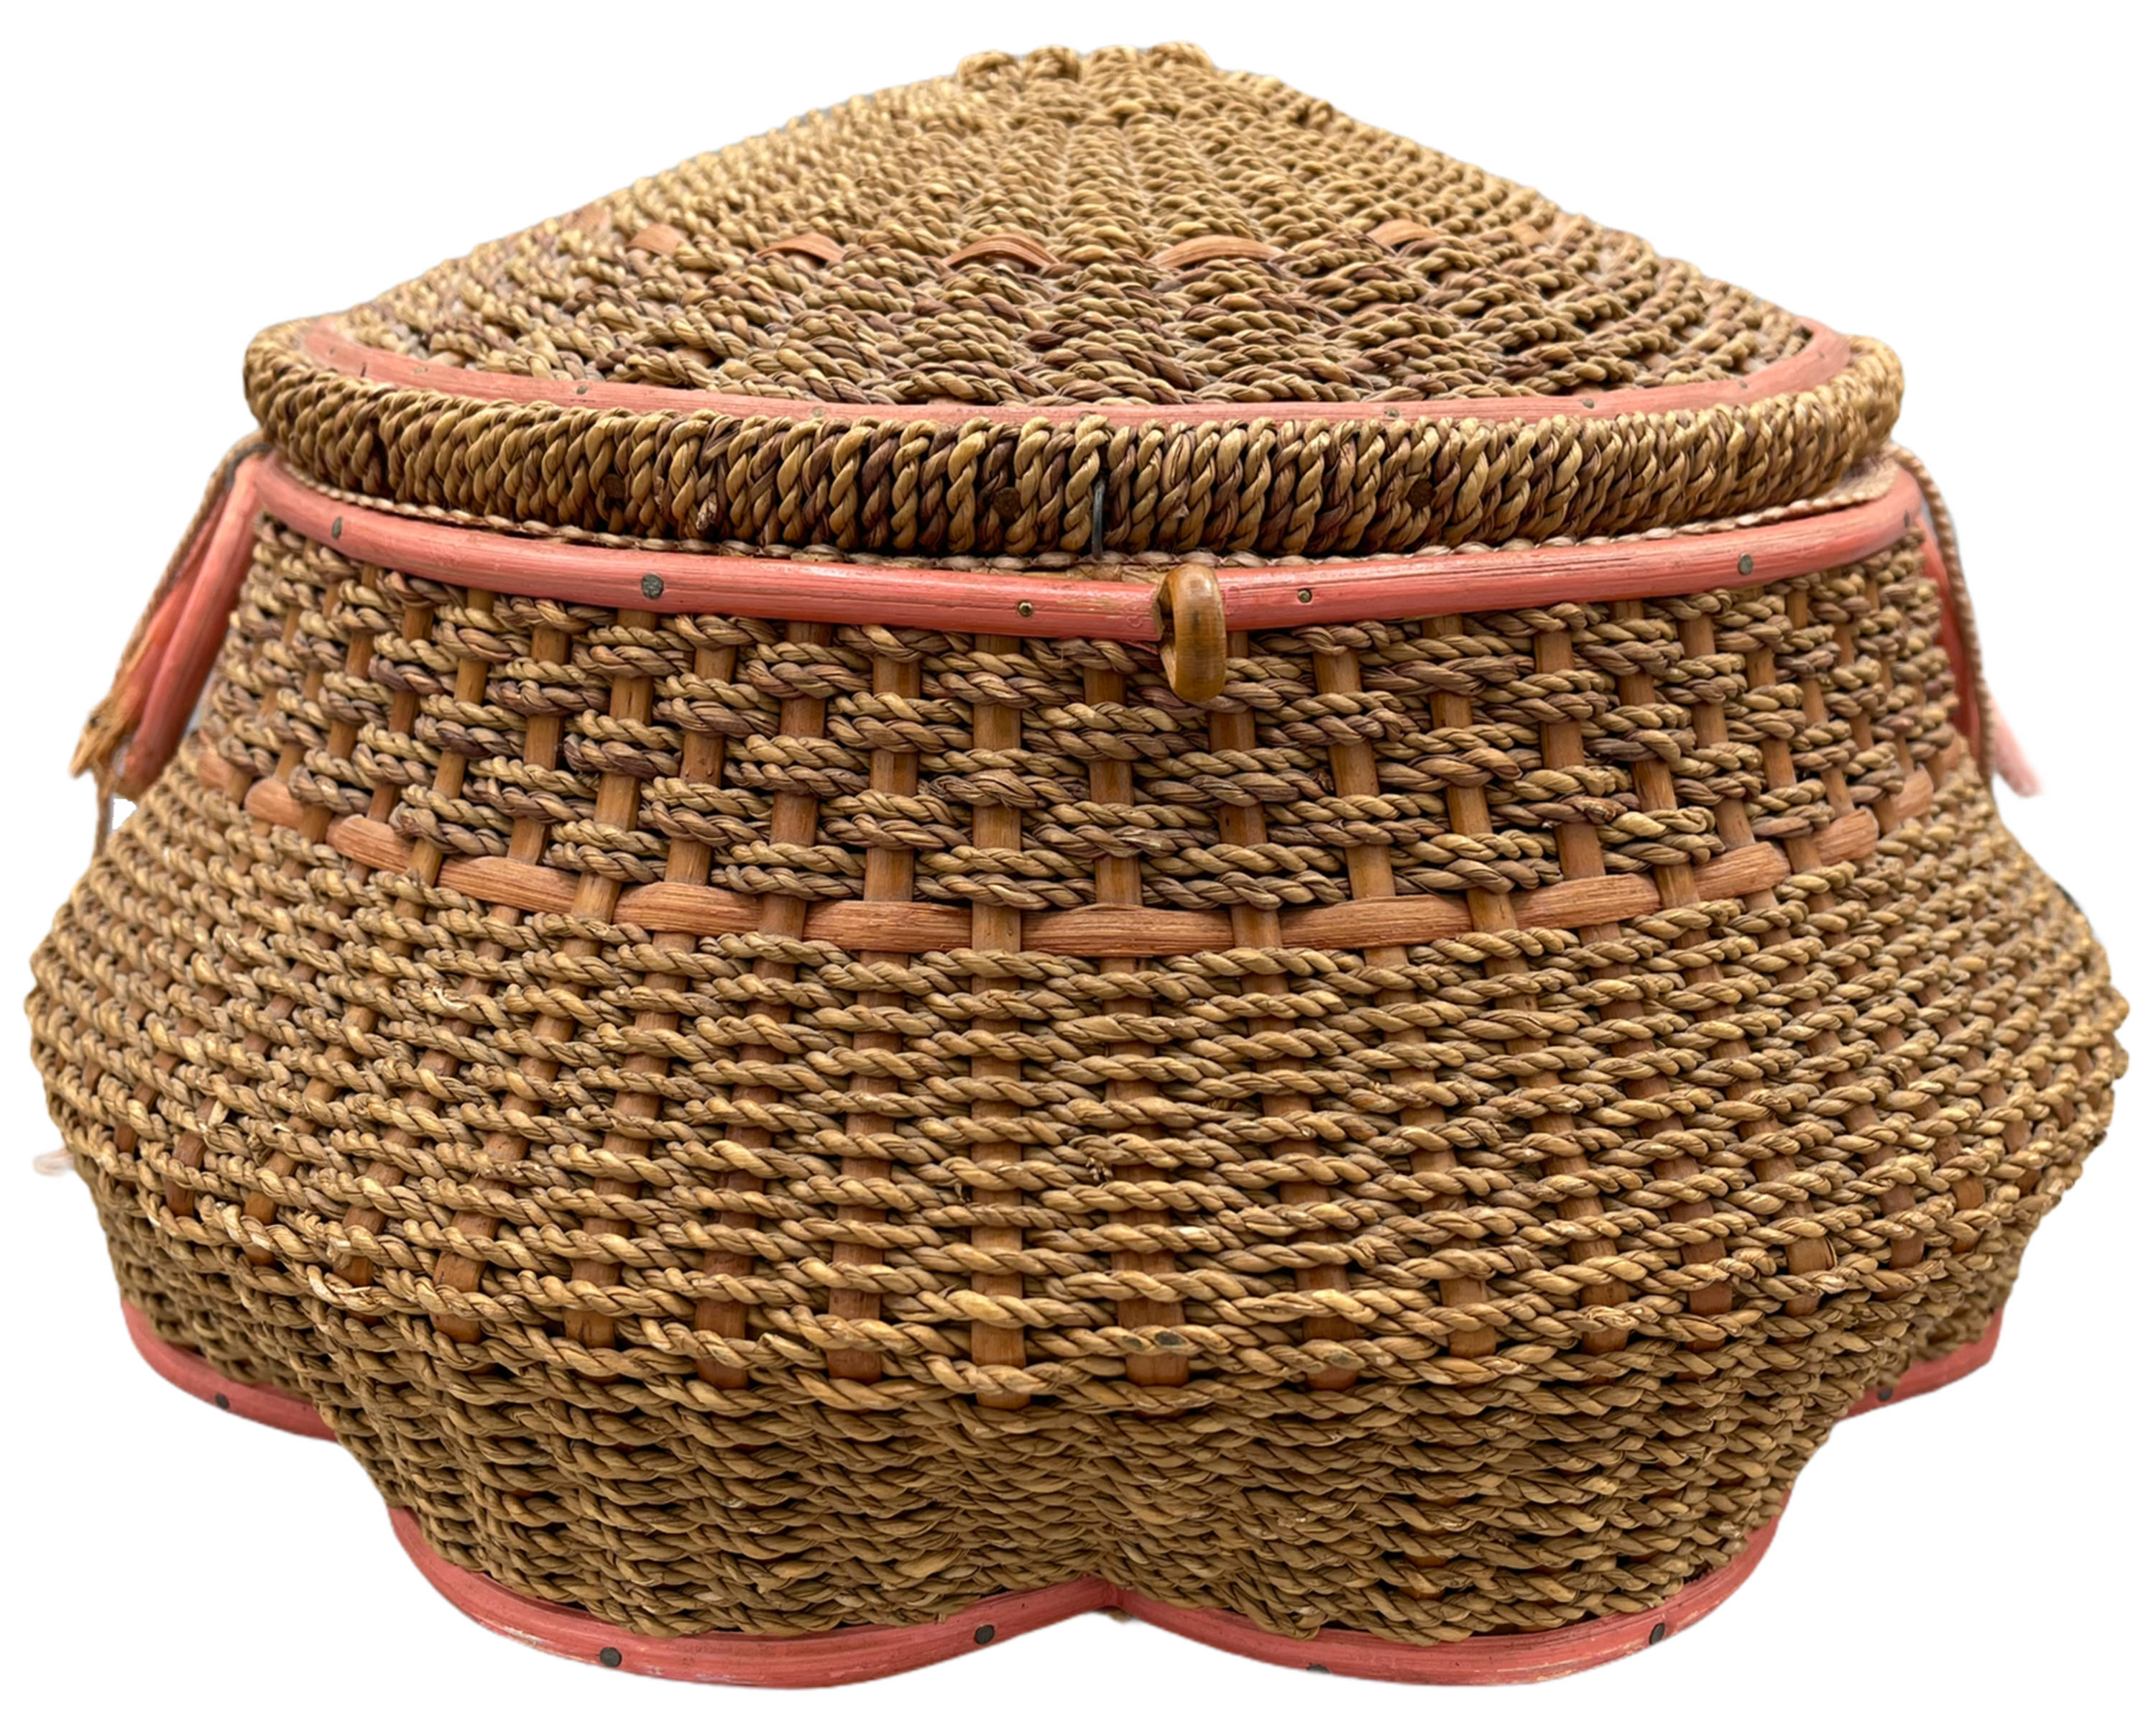 Maine-Native-American-Sweetgrass-Sewing-Basket-.jpg